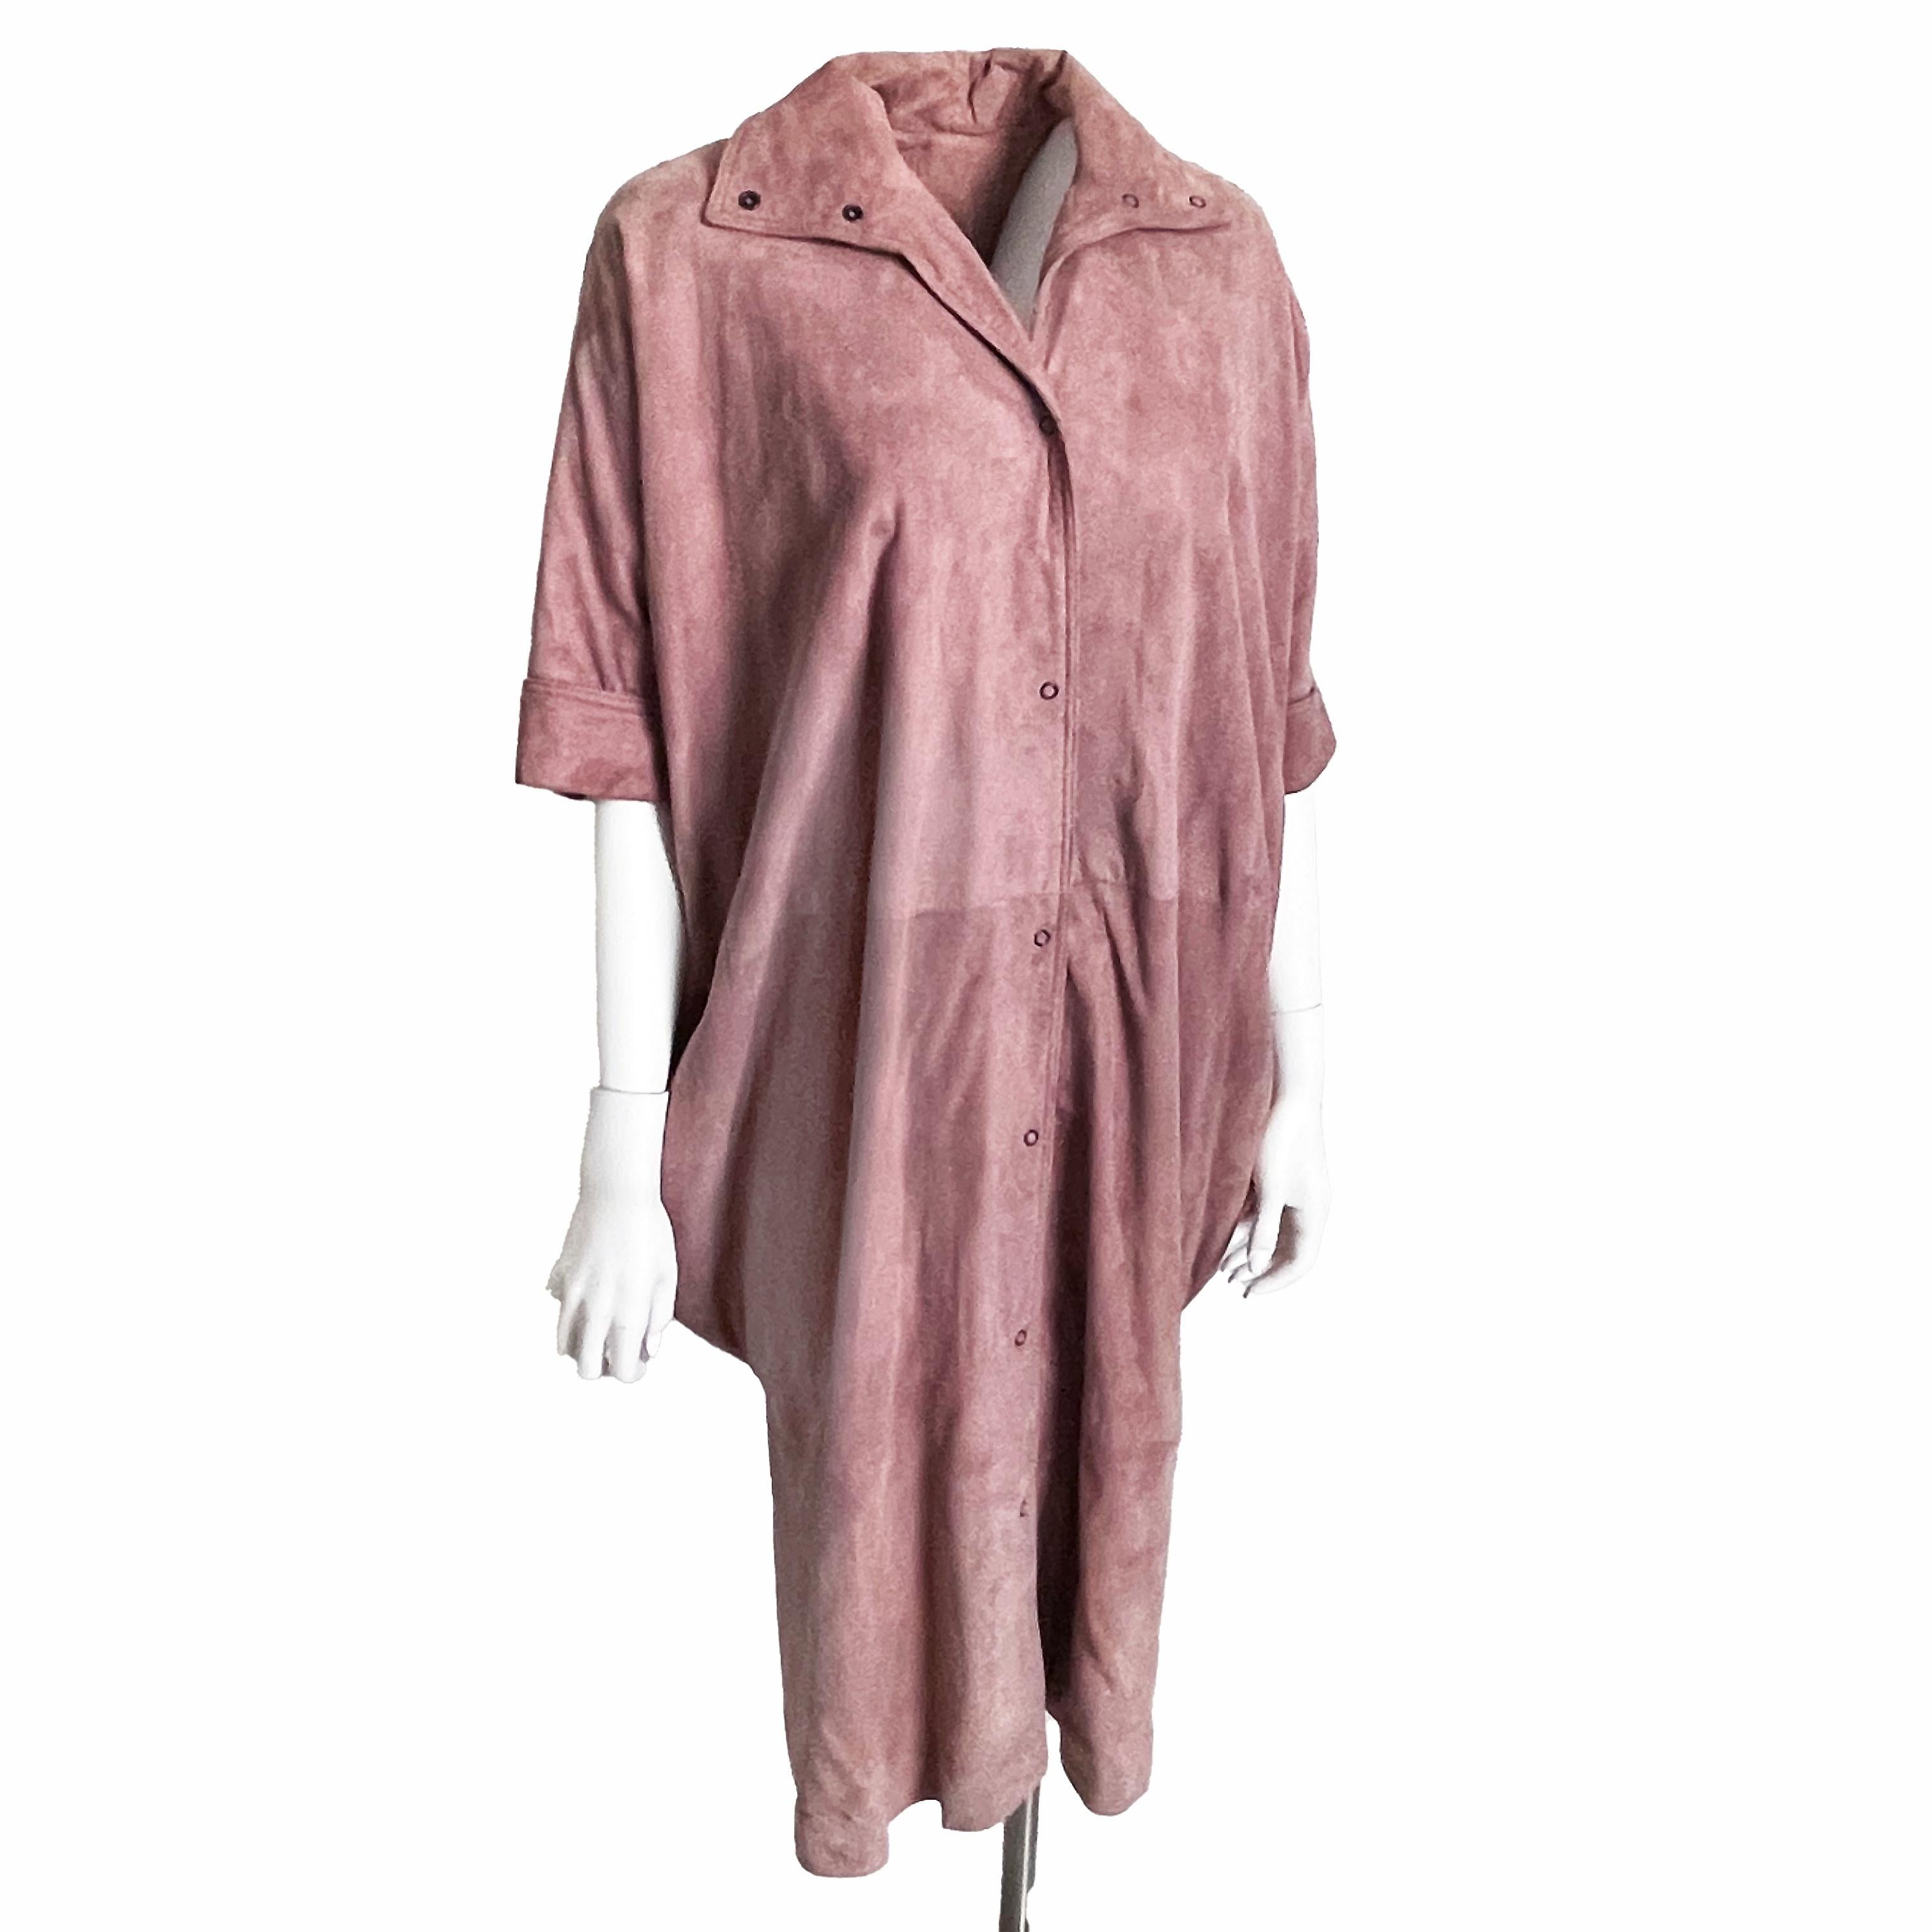 Fendi Duster Jacket Cocoon Coat Rose Pink Suede Batwing Sleeves Vintage Size S  For Sale 3